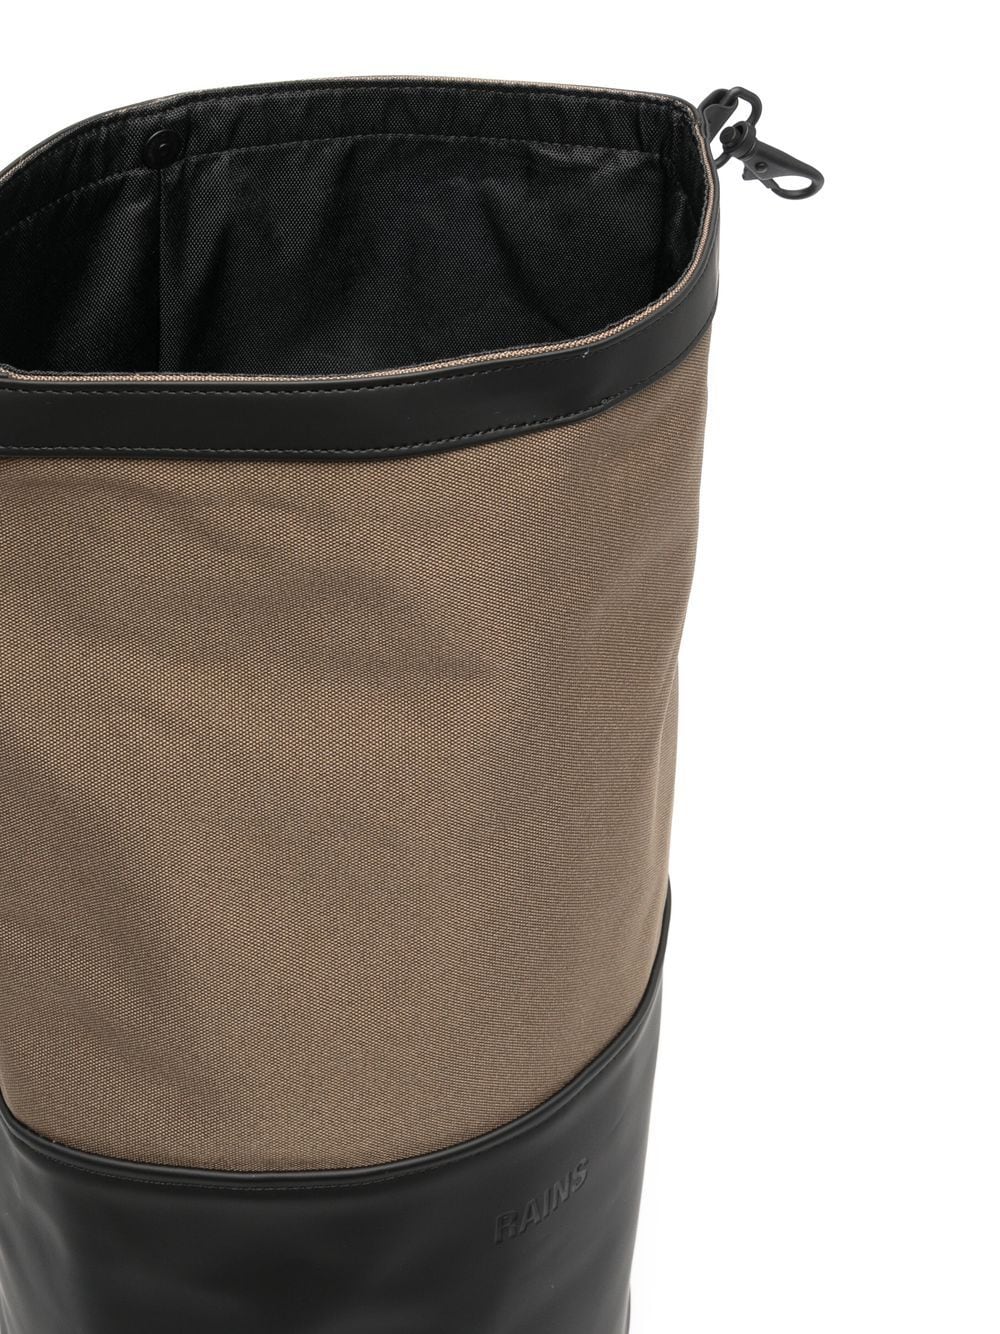 Rains Bag - Bucket sling bag mini Black, Men